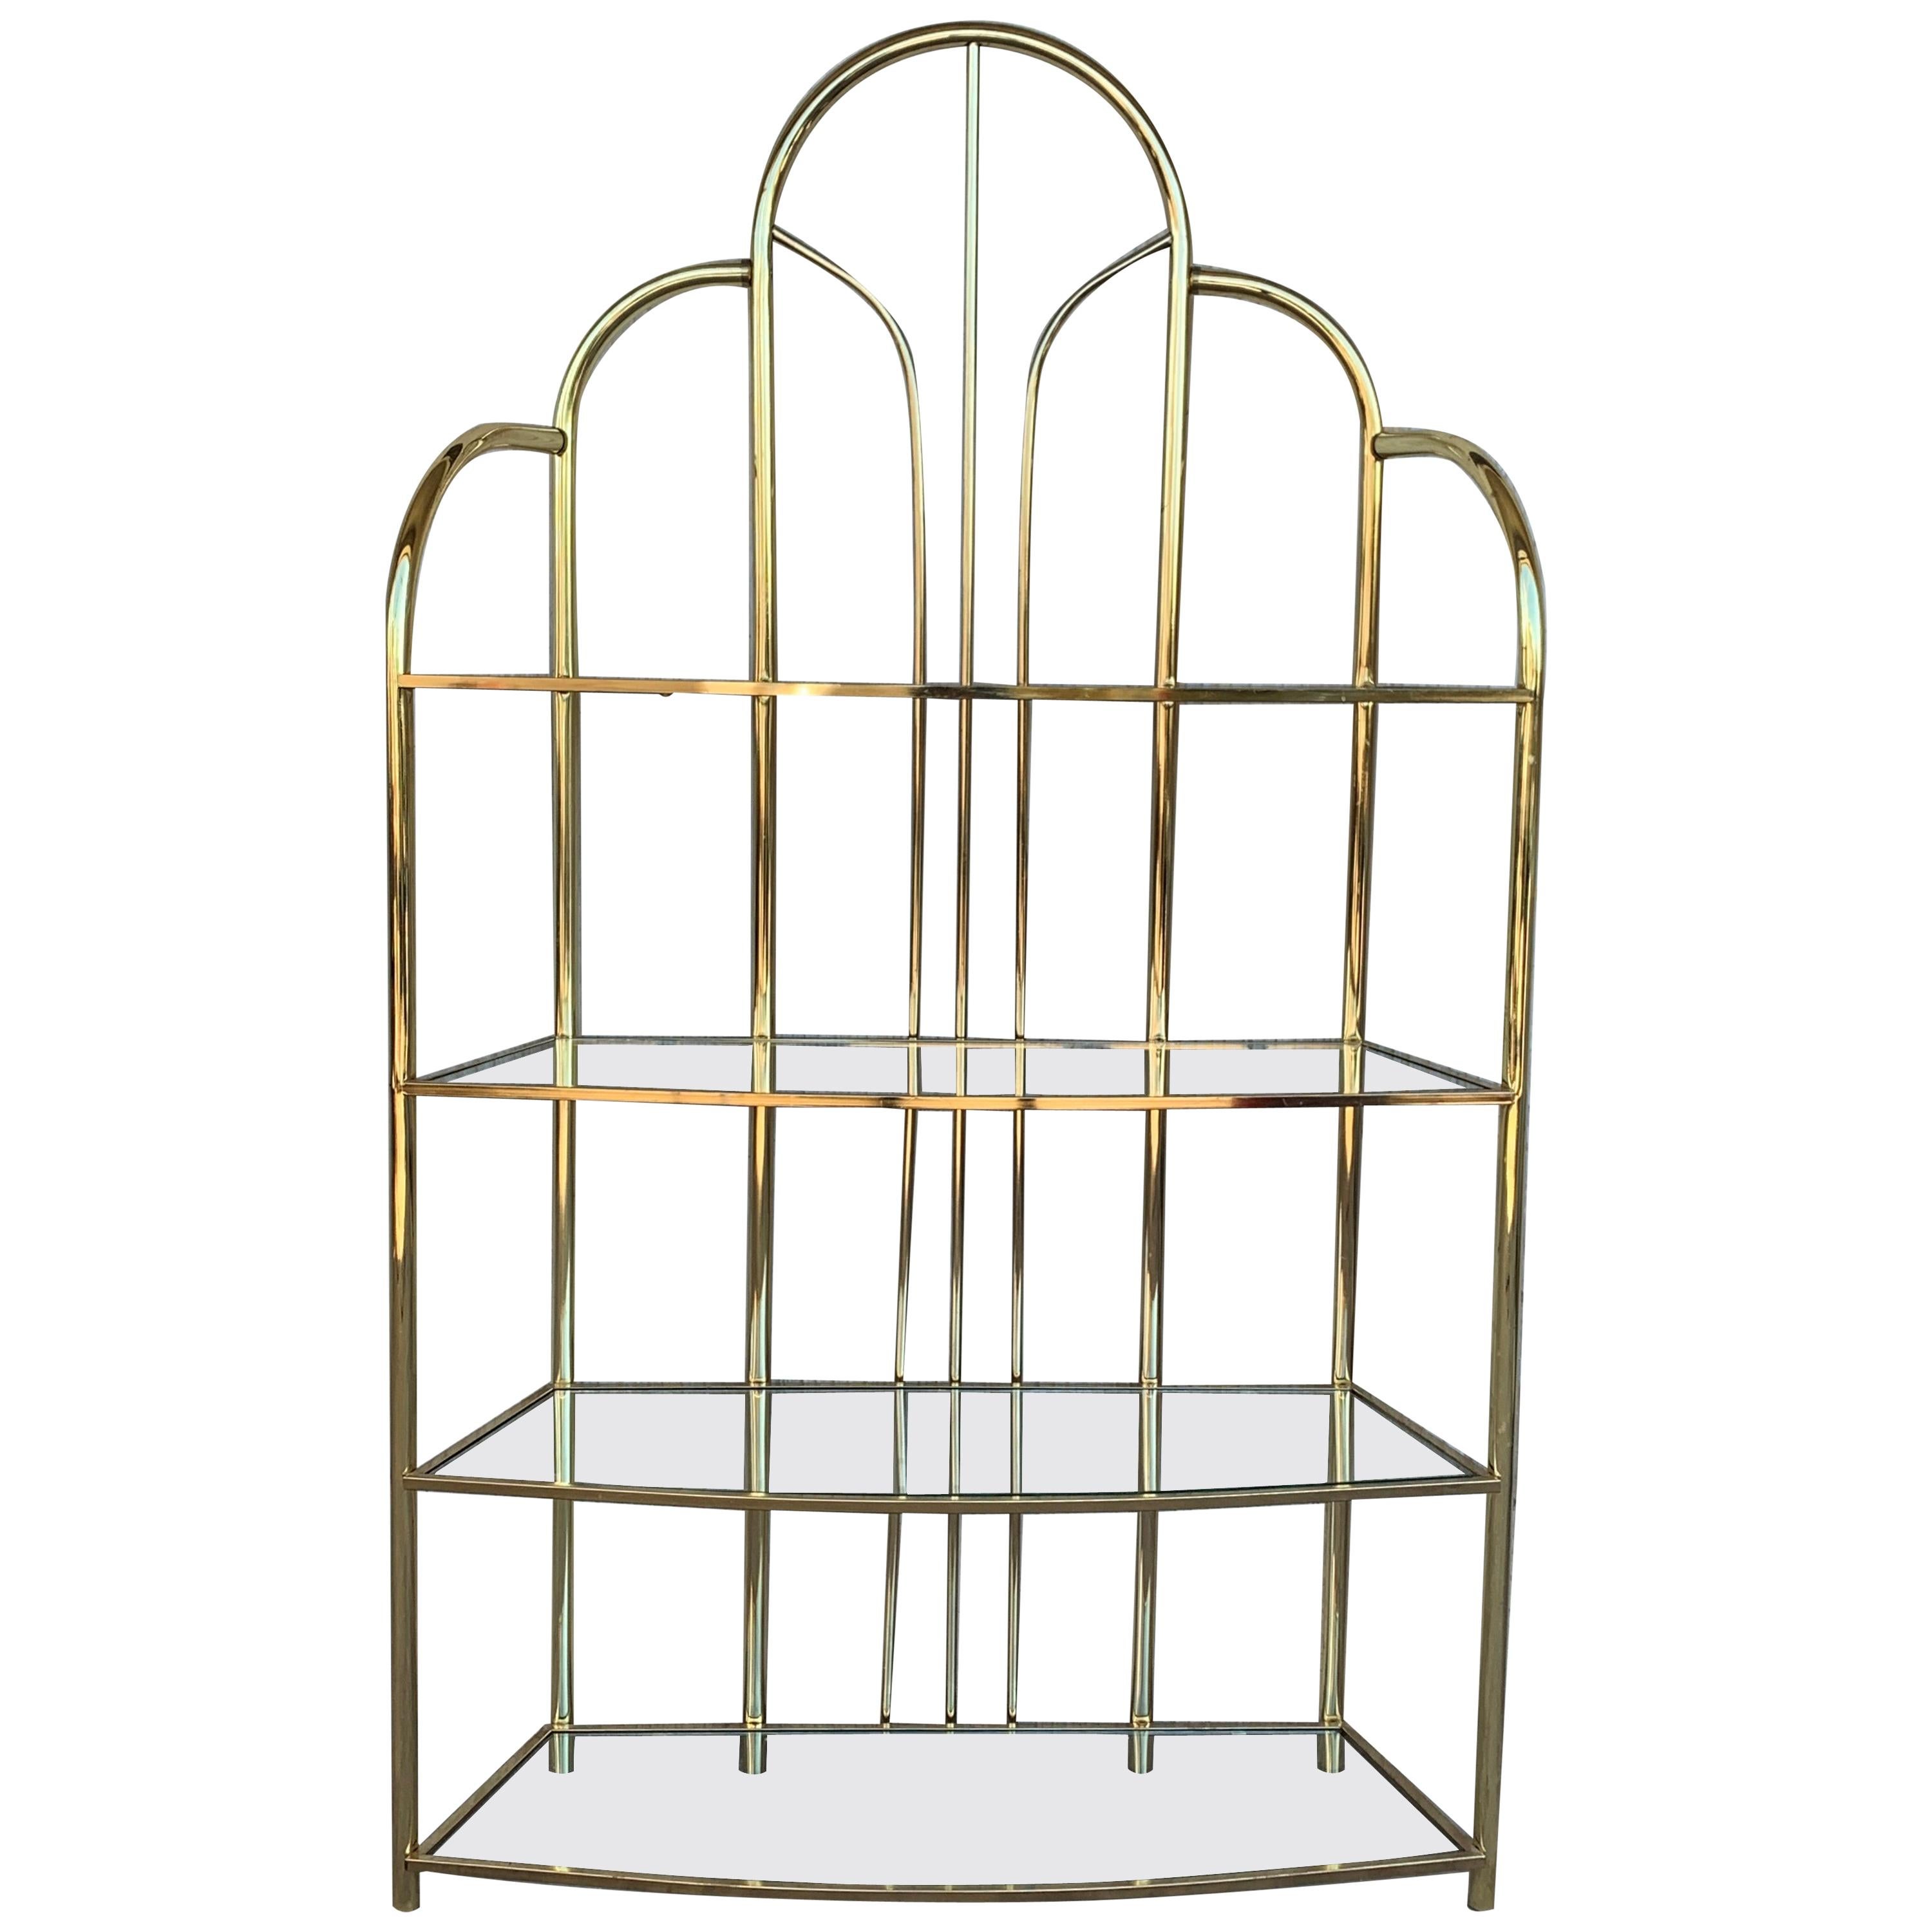 Vintage Brass Étagère Arched Glass Display Shelf with Four Shelves